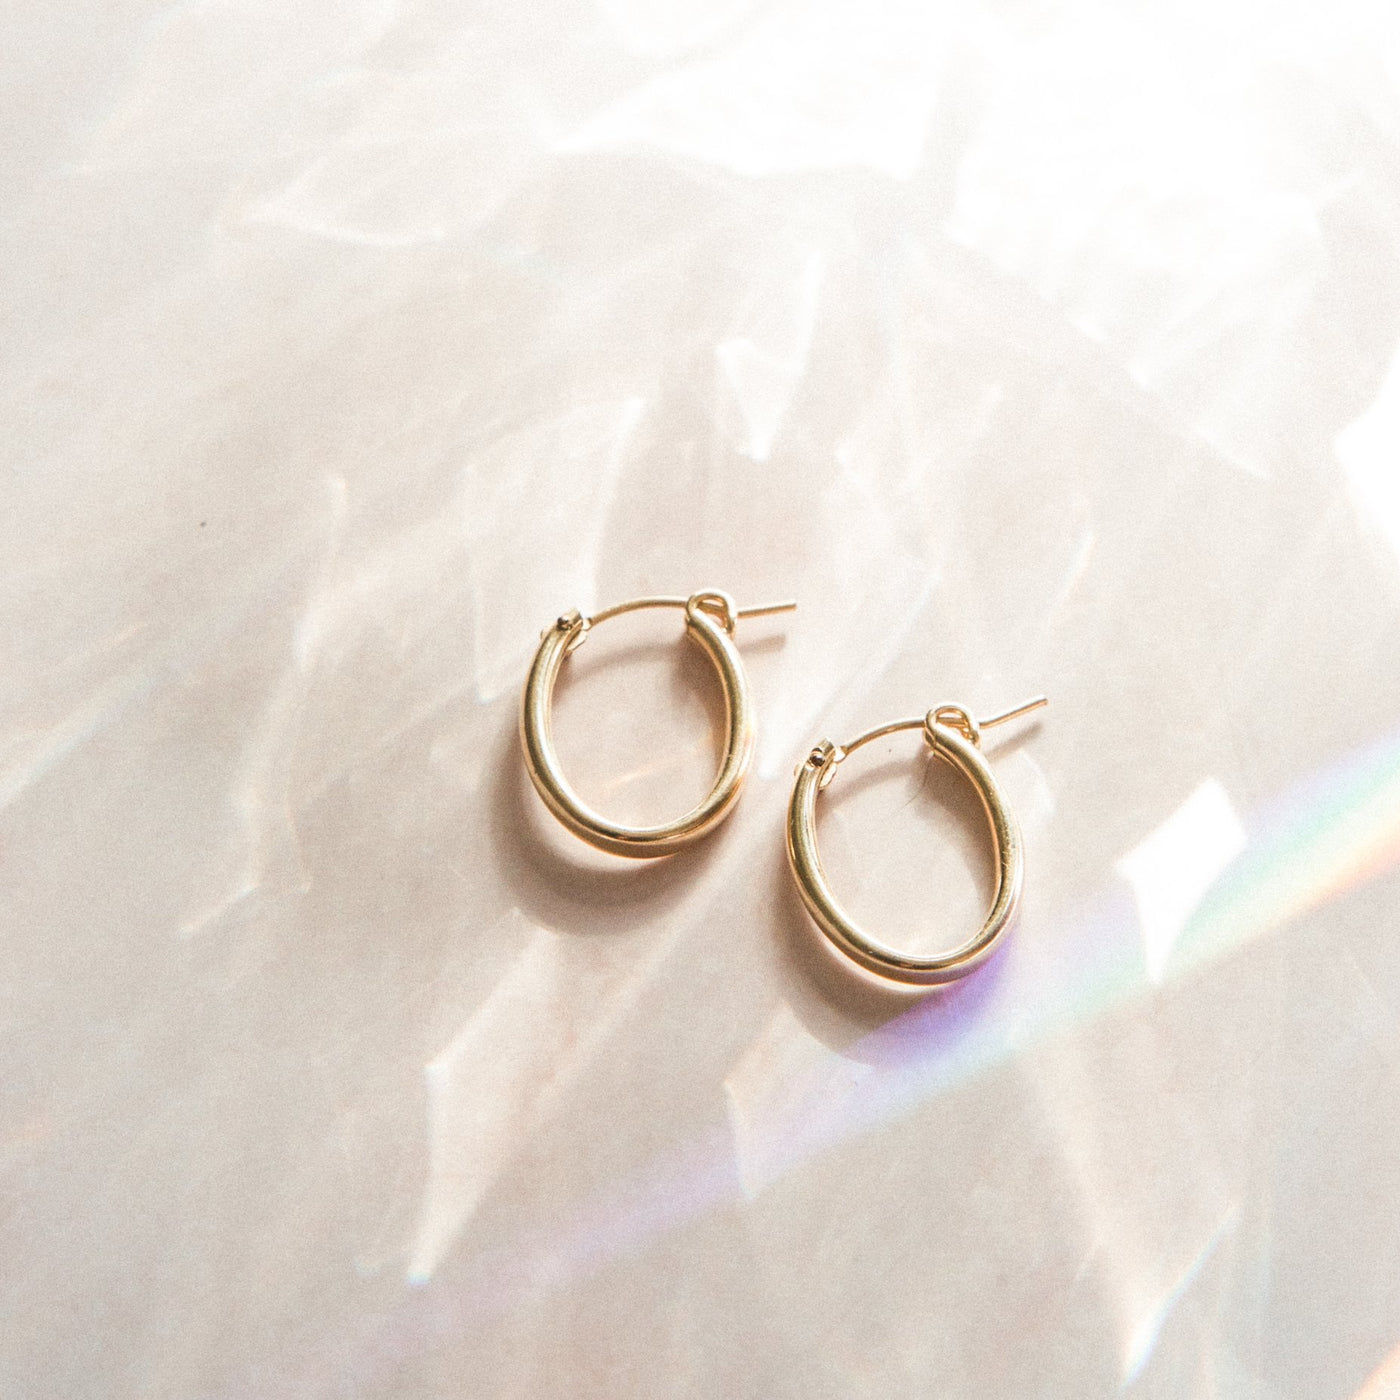 Oval Everyday Hoop Earrings by Simple & Dainty Jewelry